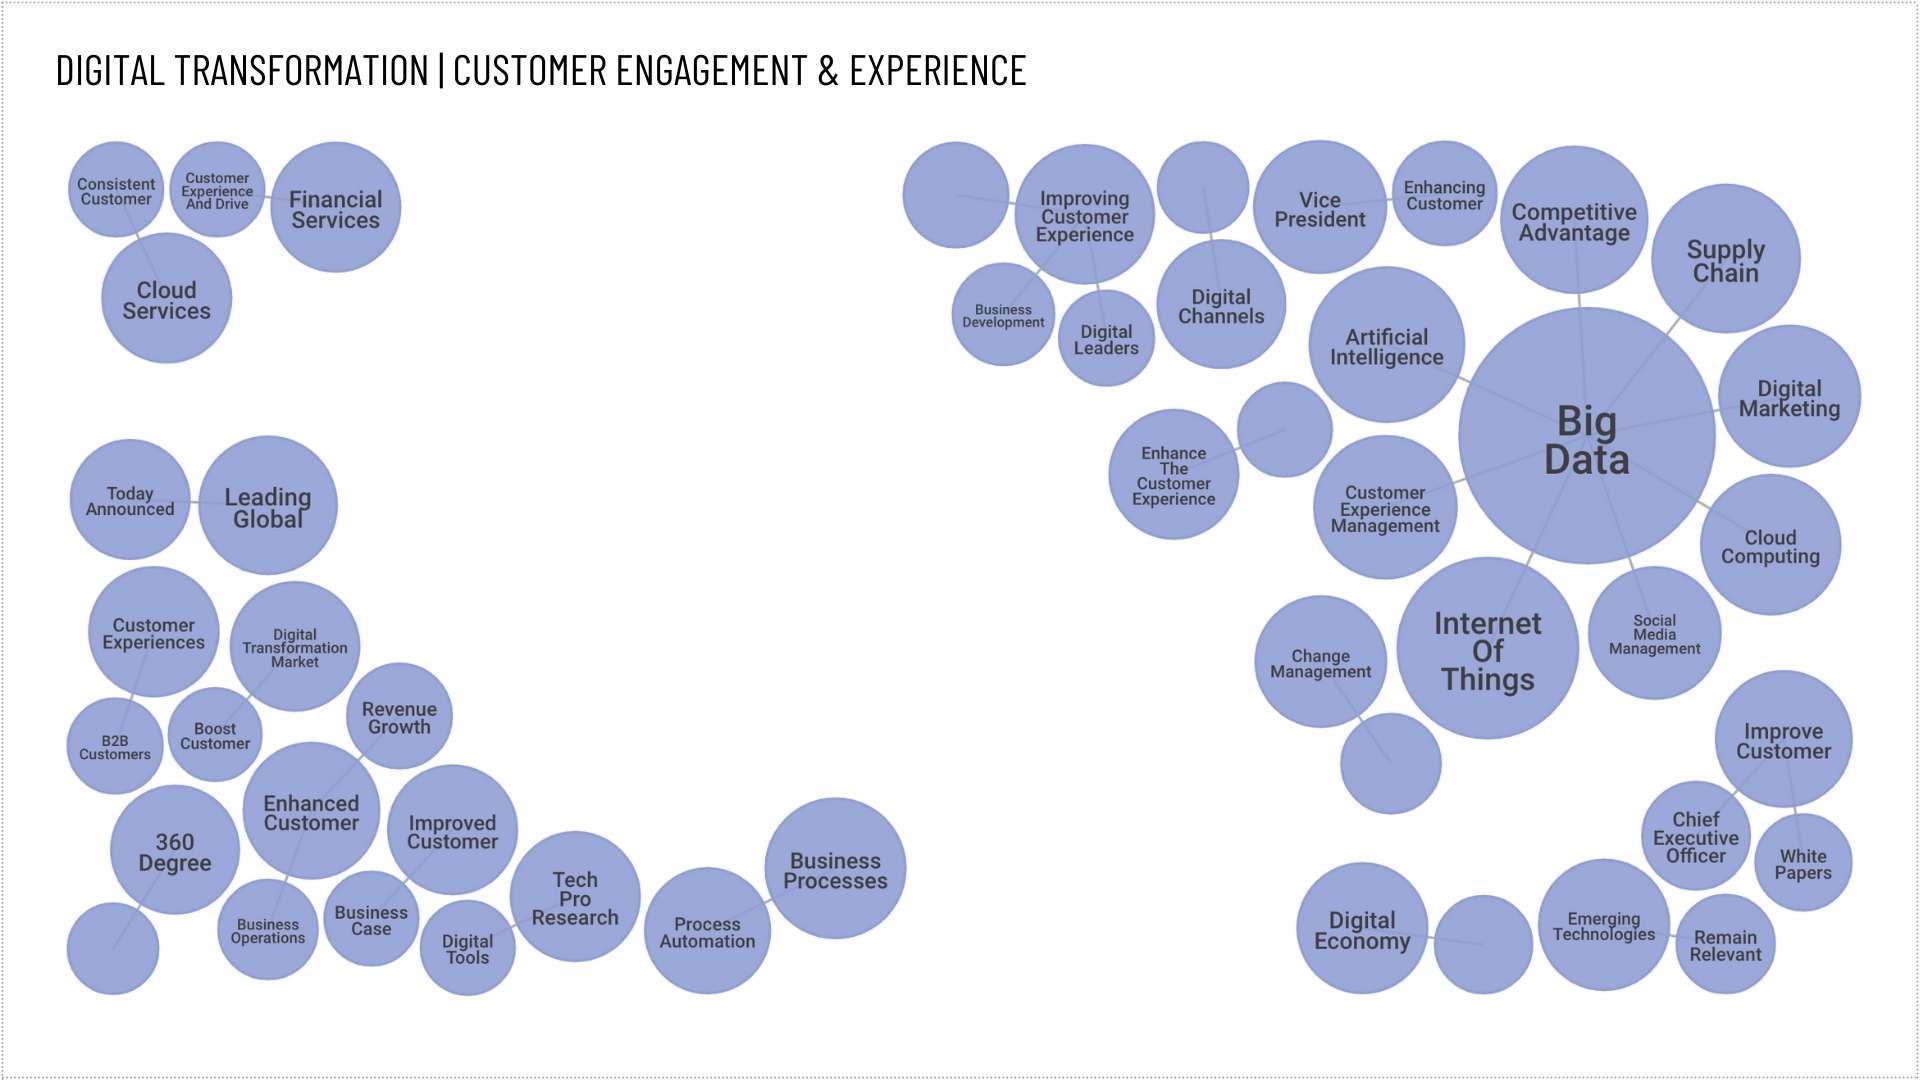 Customer Experience Analysis of Digital Transformation Topics